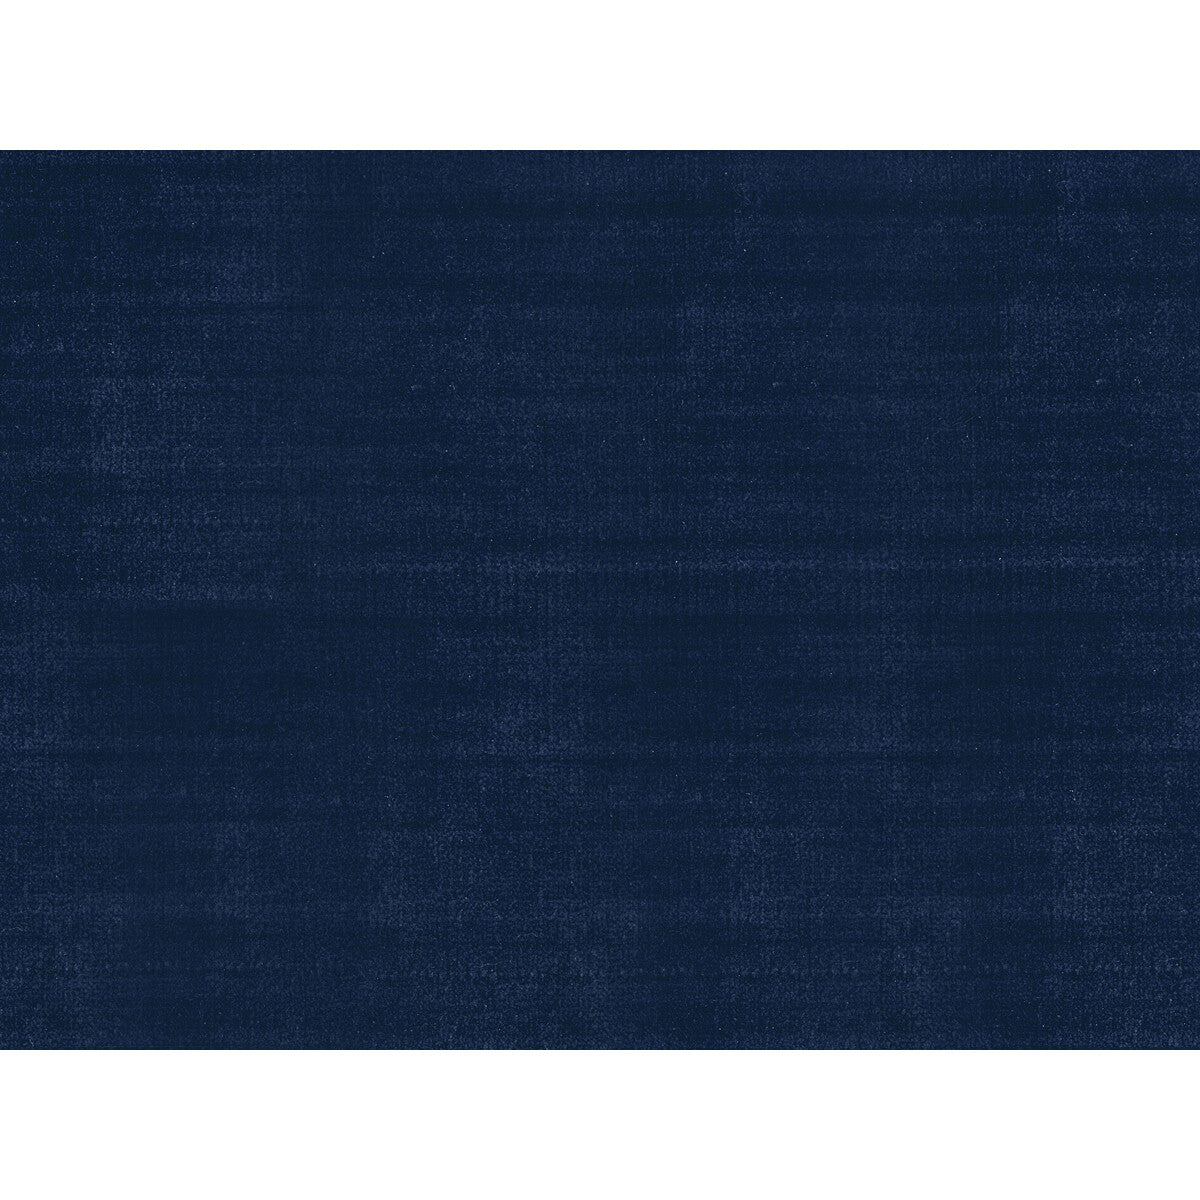 York Velvet fabric in navy color - pattern 33438.285.0 - by Kravet Couture